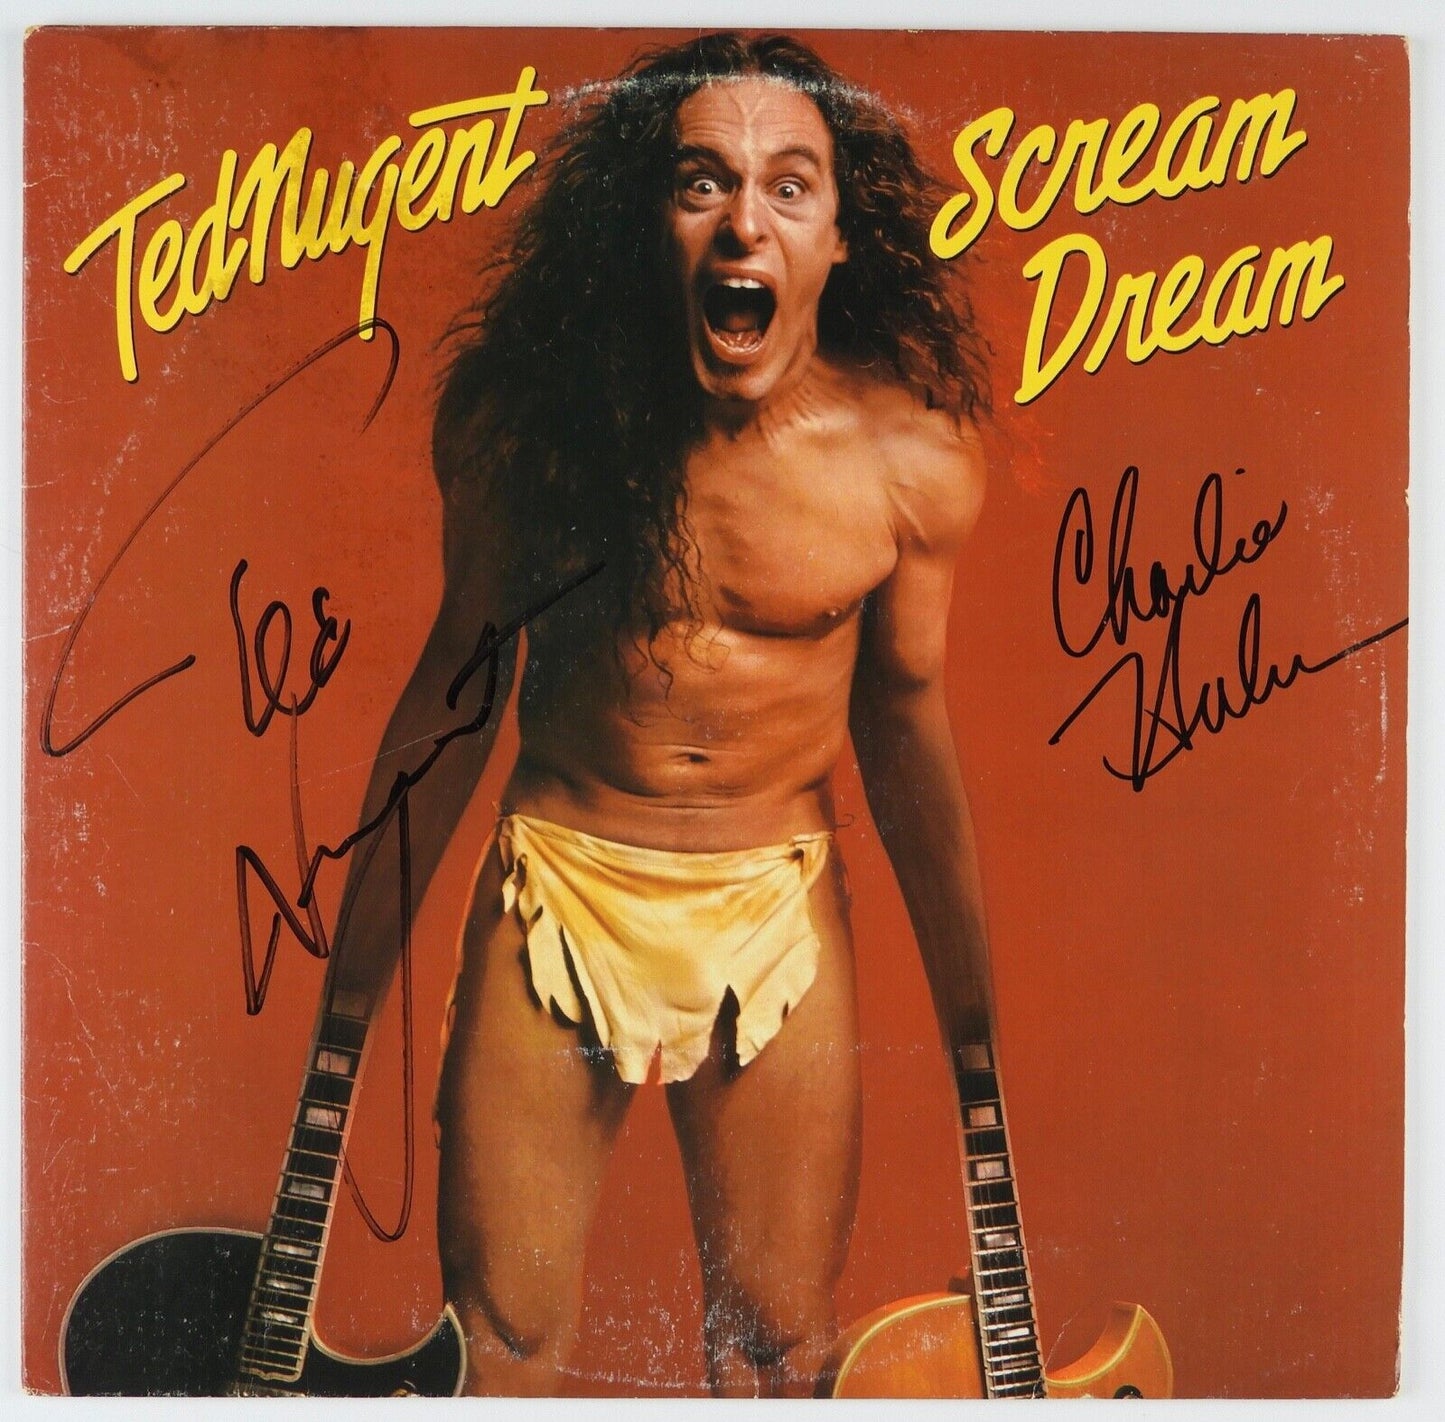 Ted Nugent Signed Autograph JSA Record Album Vinyl Scream Dream